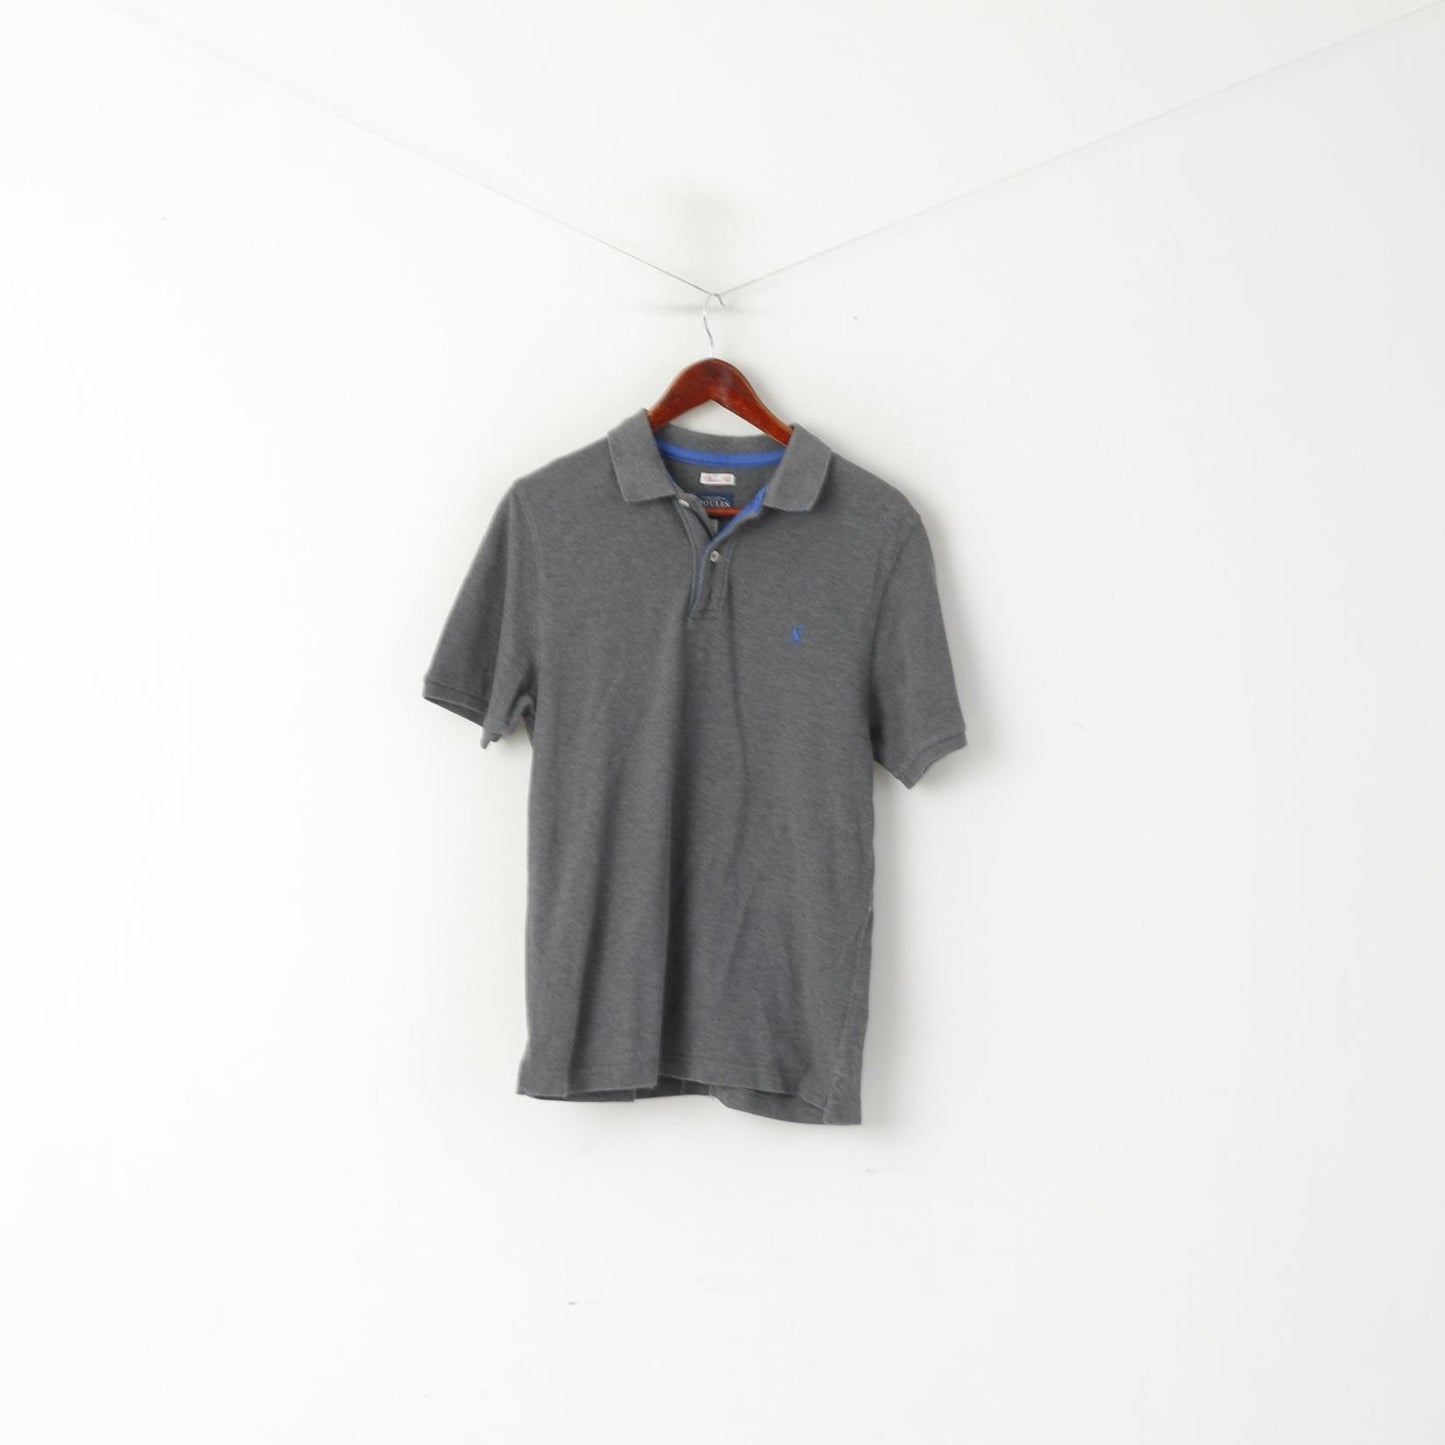 Joules Clothing Men M Polo Shirt Grey Cotton Classic Fit Short Sleeve Plain Top